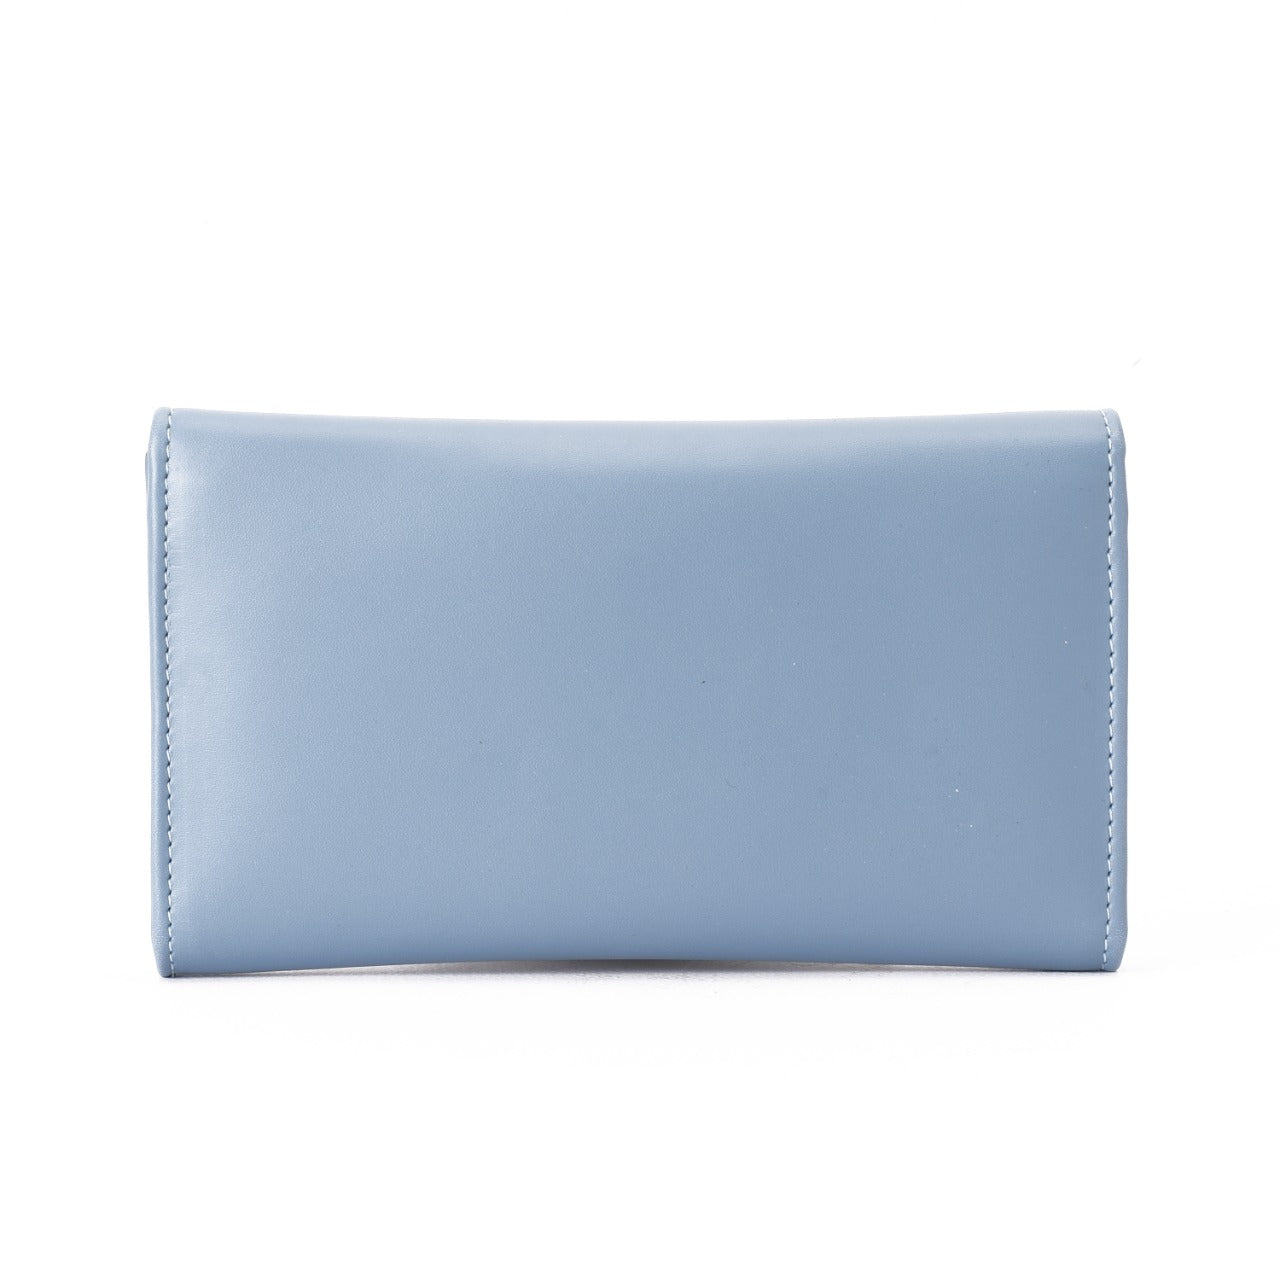 Vintage Baby blue Wallet - Code 525